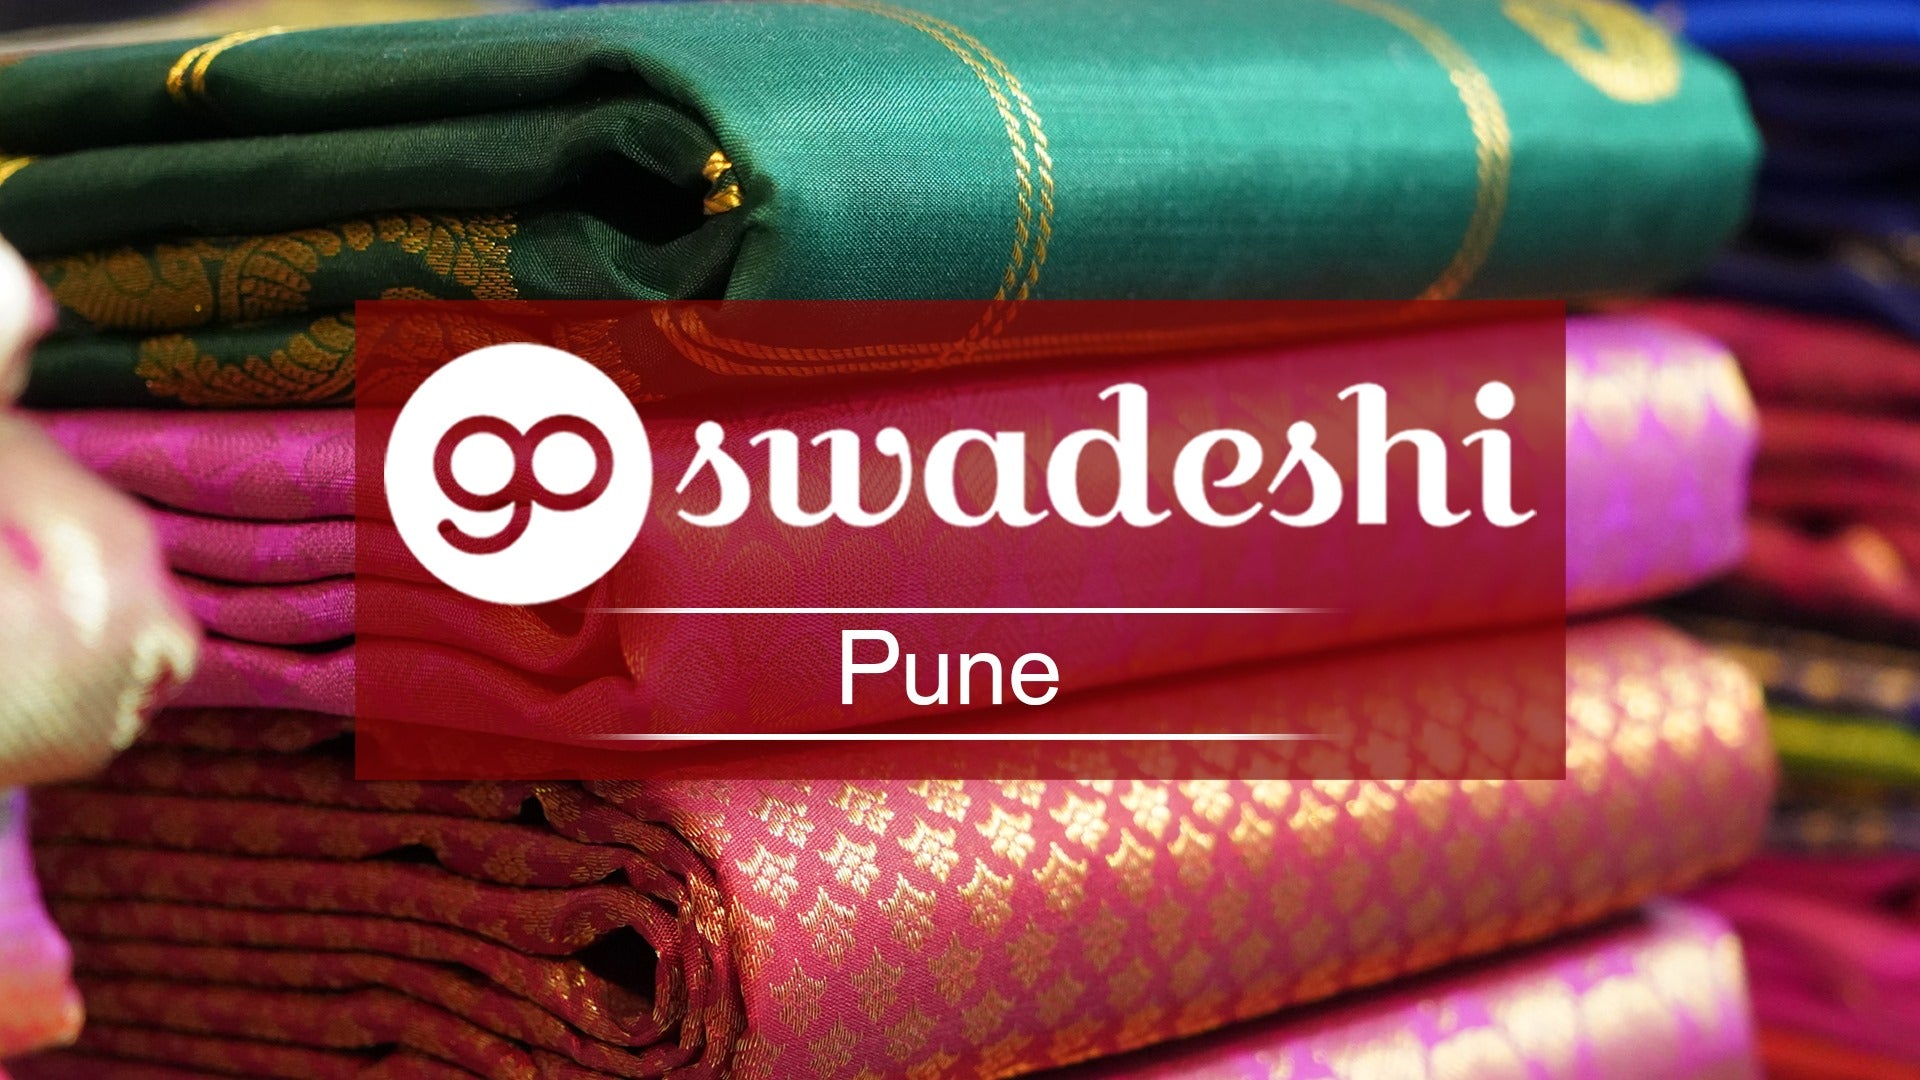 Go Swadeshi | Pune